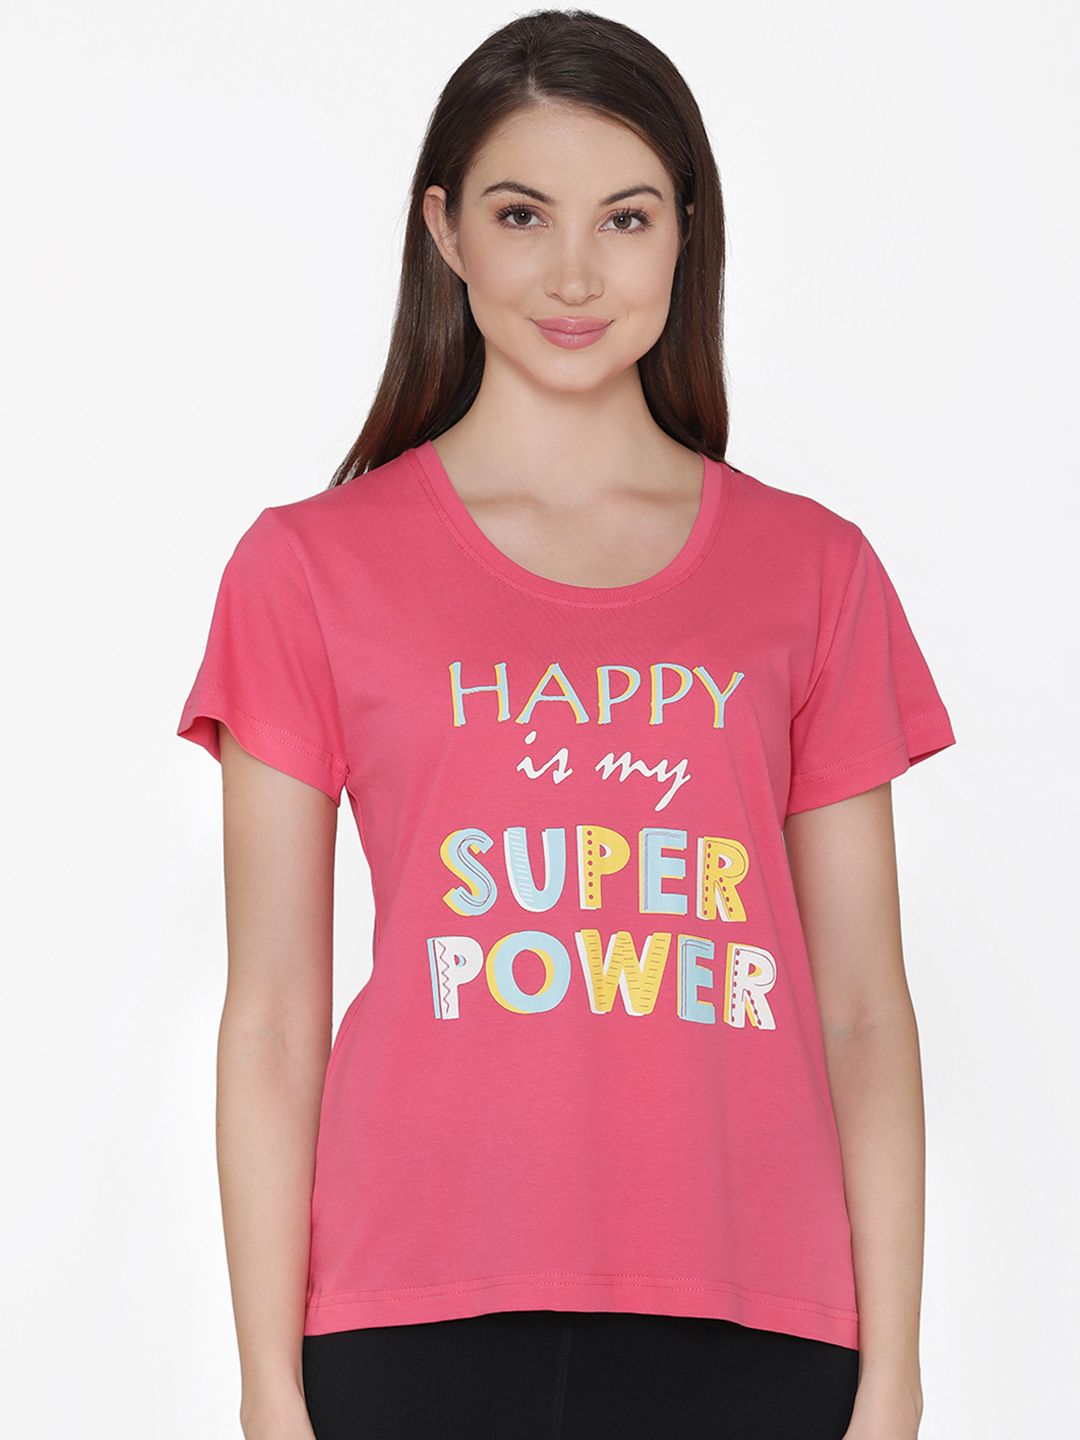 Clovia Women Pink Printed Round Neck Lounge T-shirt LT0124P14 Price in India